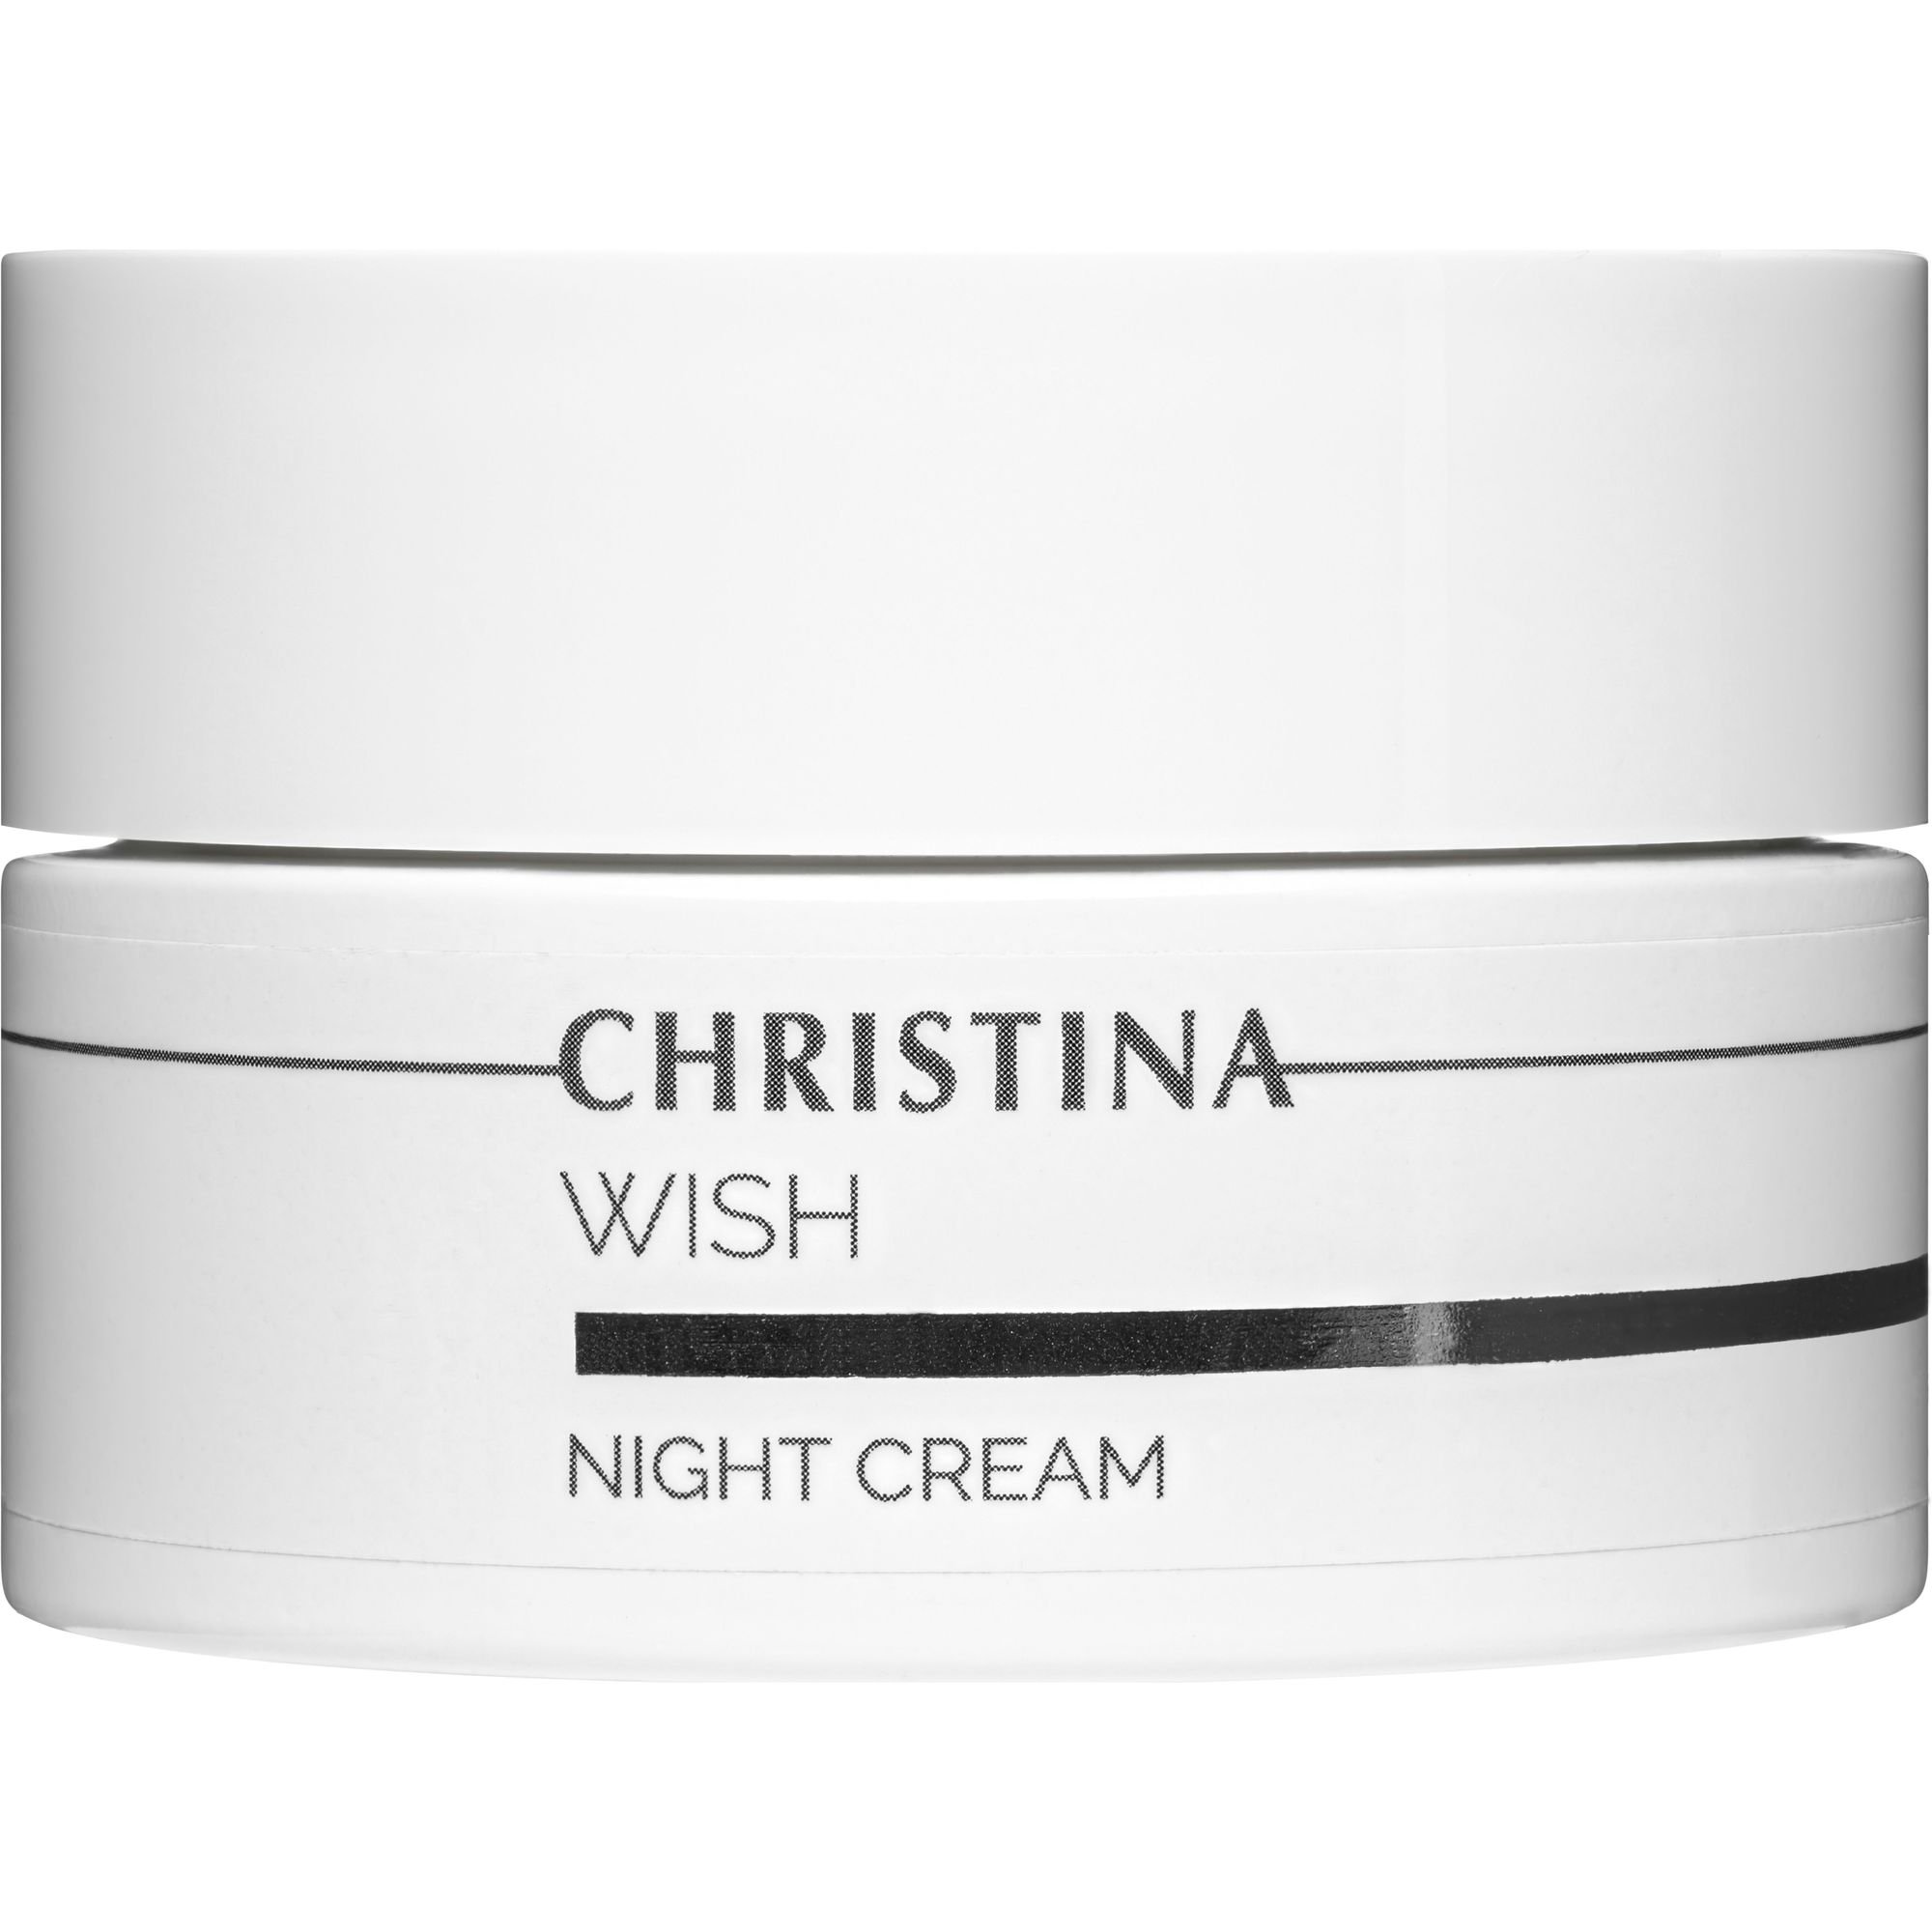 Нічний крем Christina Wish Night Cream 50 мл - фото 1